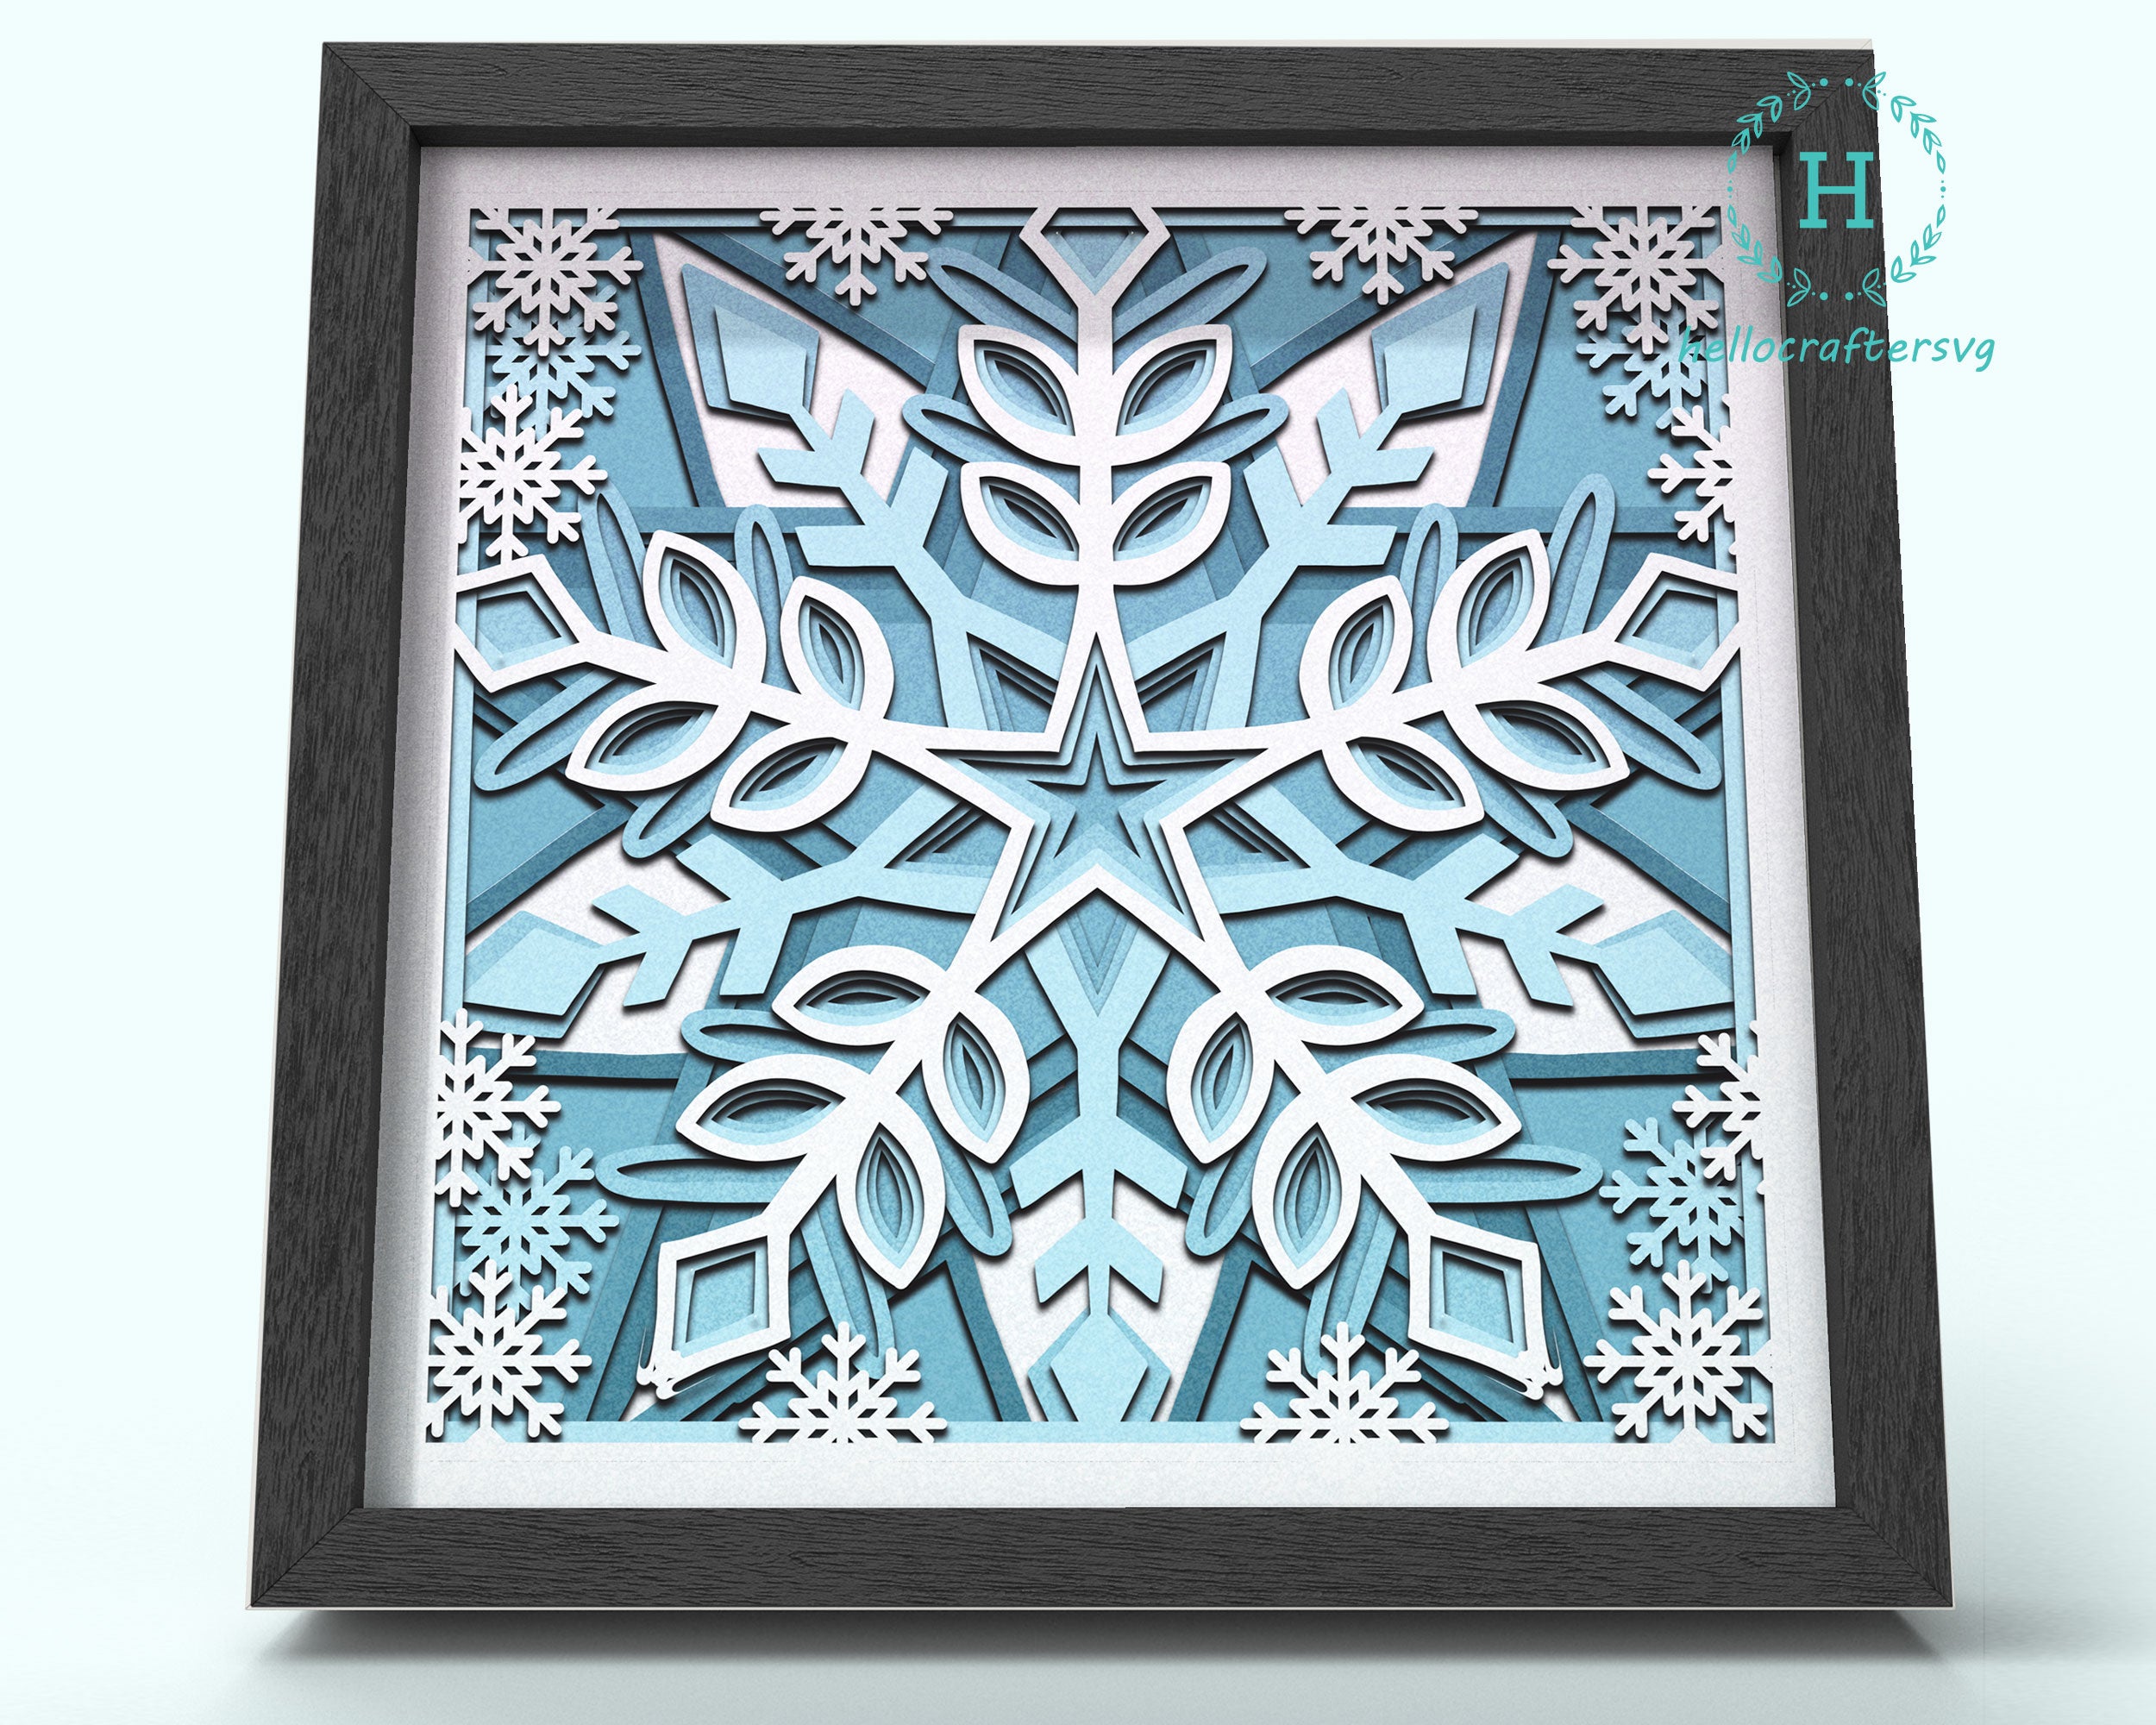 3D Snowflake SVG Bundle 1 9 Paper Snowflake SVG Templates Christmas  Snowflake SVG Cut File Paper Snow Svg 